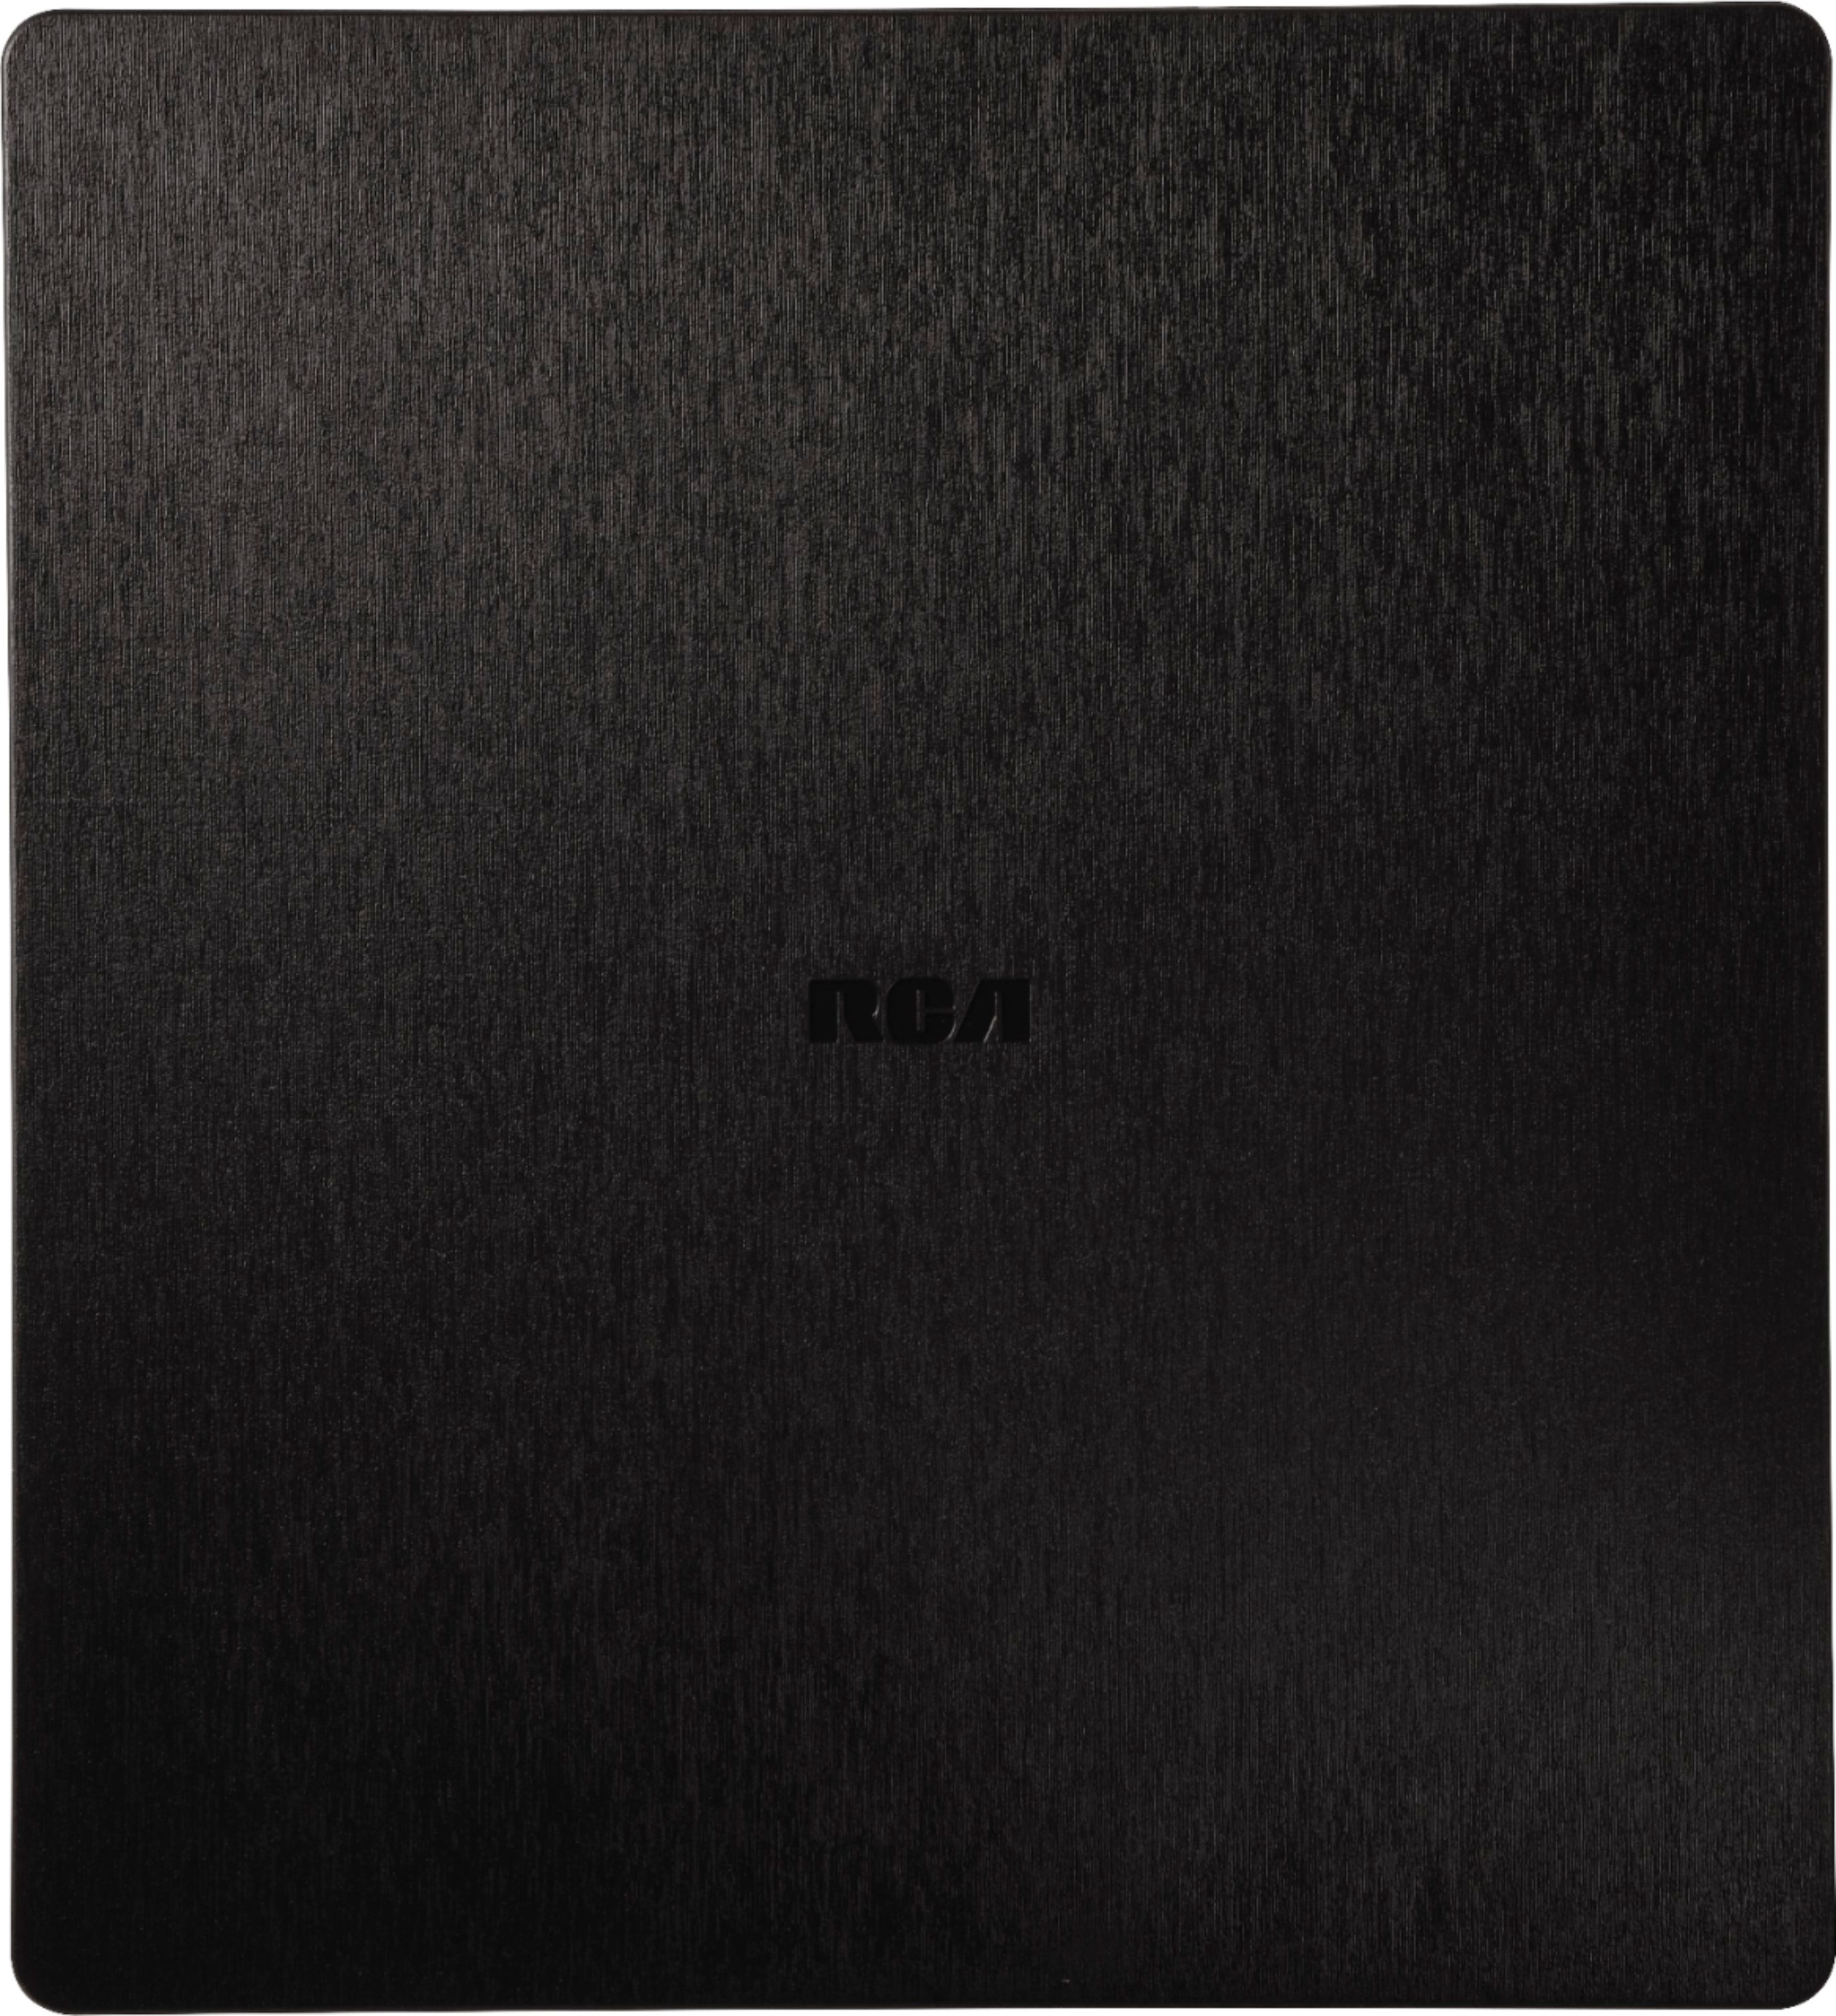 RCA - Indoor Flat Amplified HDTV Antenna - Black